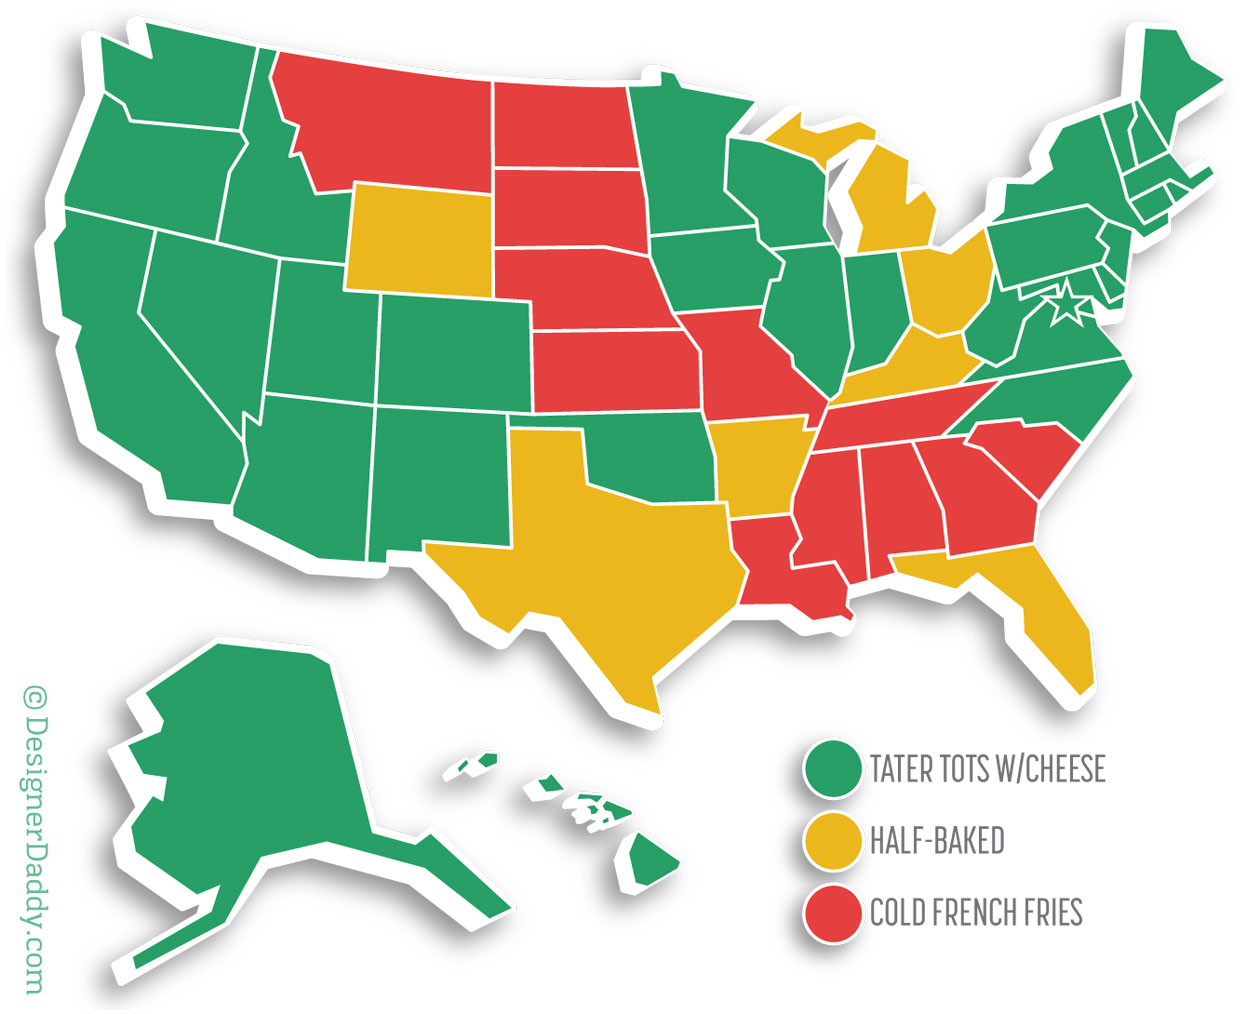 Same-Sex Marriage in the US - Idaho, Alaska, North Carolina, Arizona